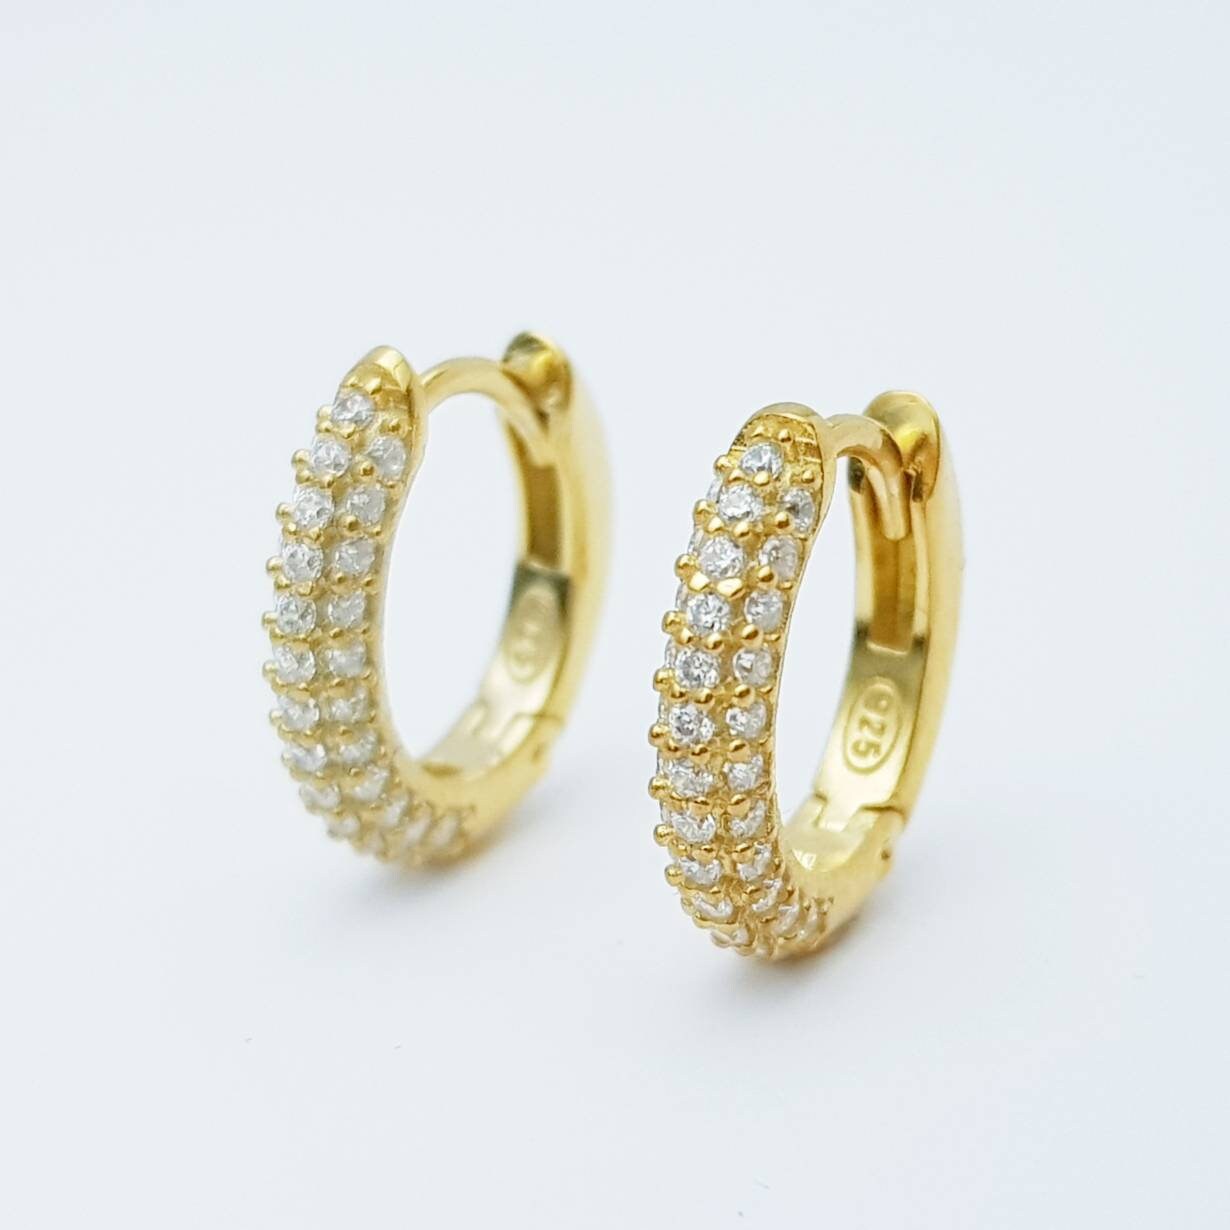 Small hoop earrings, gold huggie earrings, faux diamond huggies, elegant diamond hoop earrings